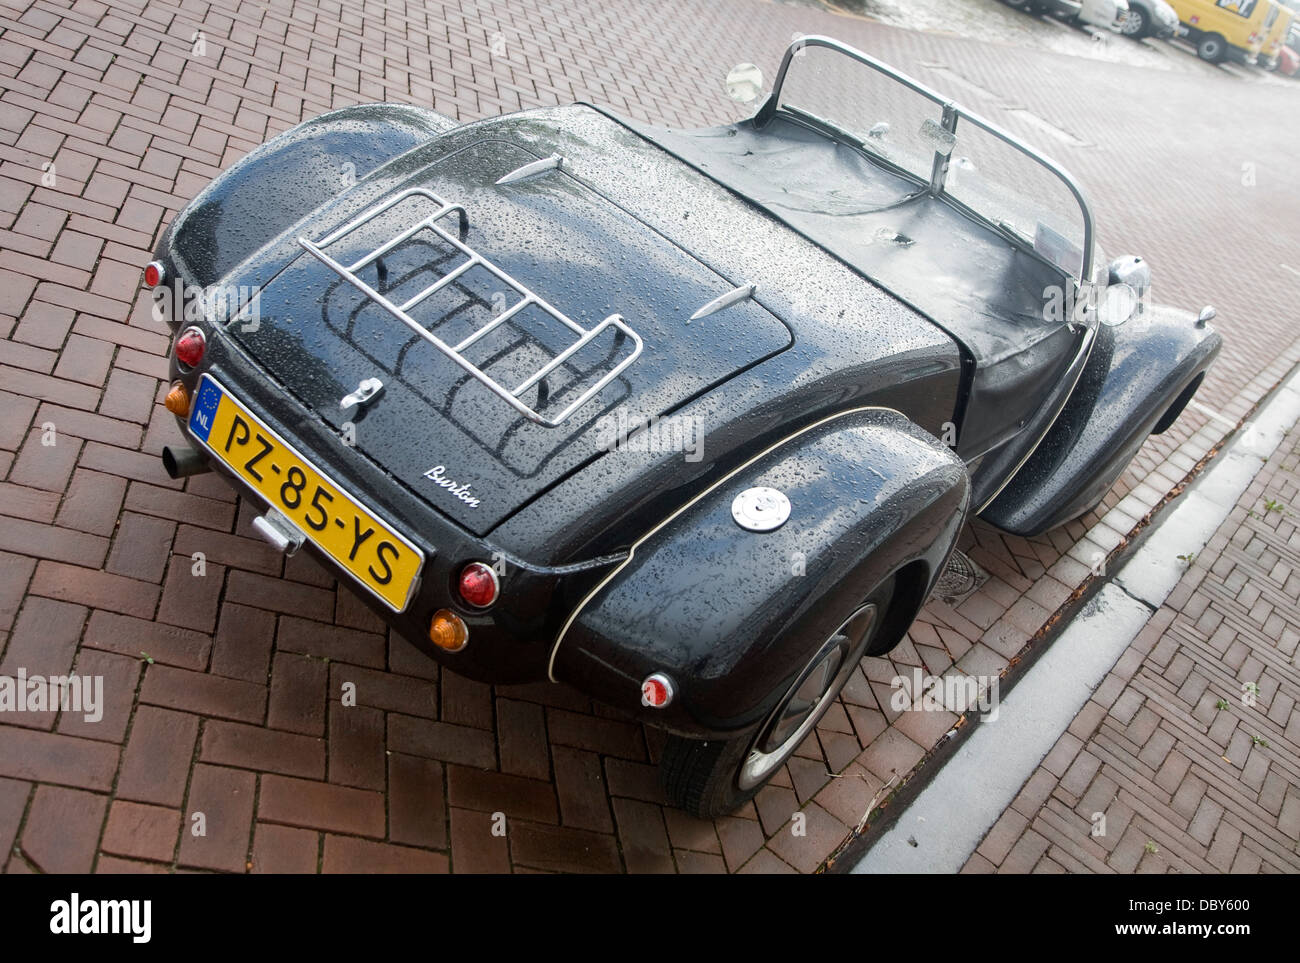 Burton kit car parked on street Netherlands Stock Photo - Alamy